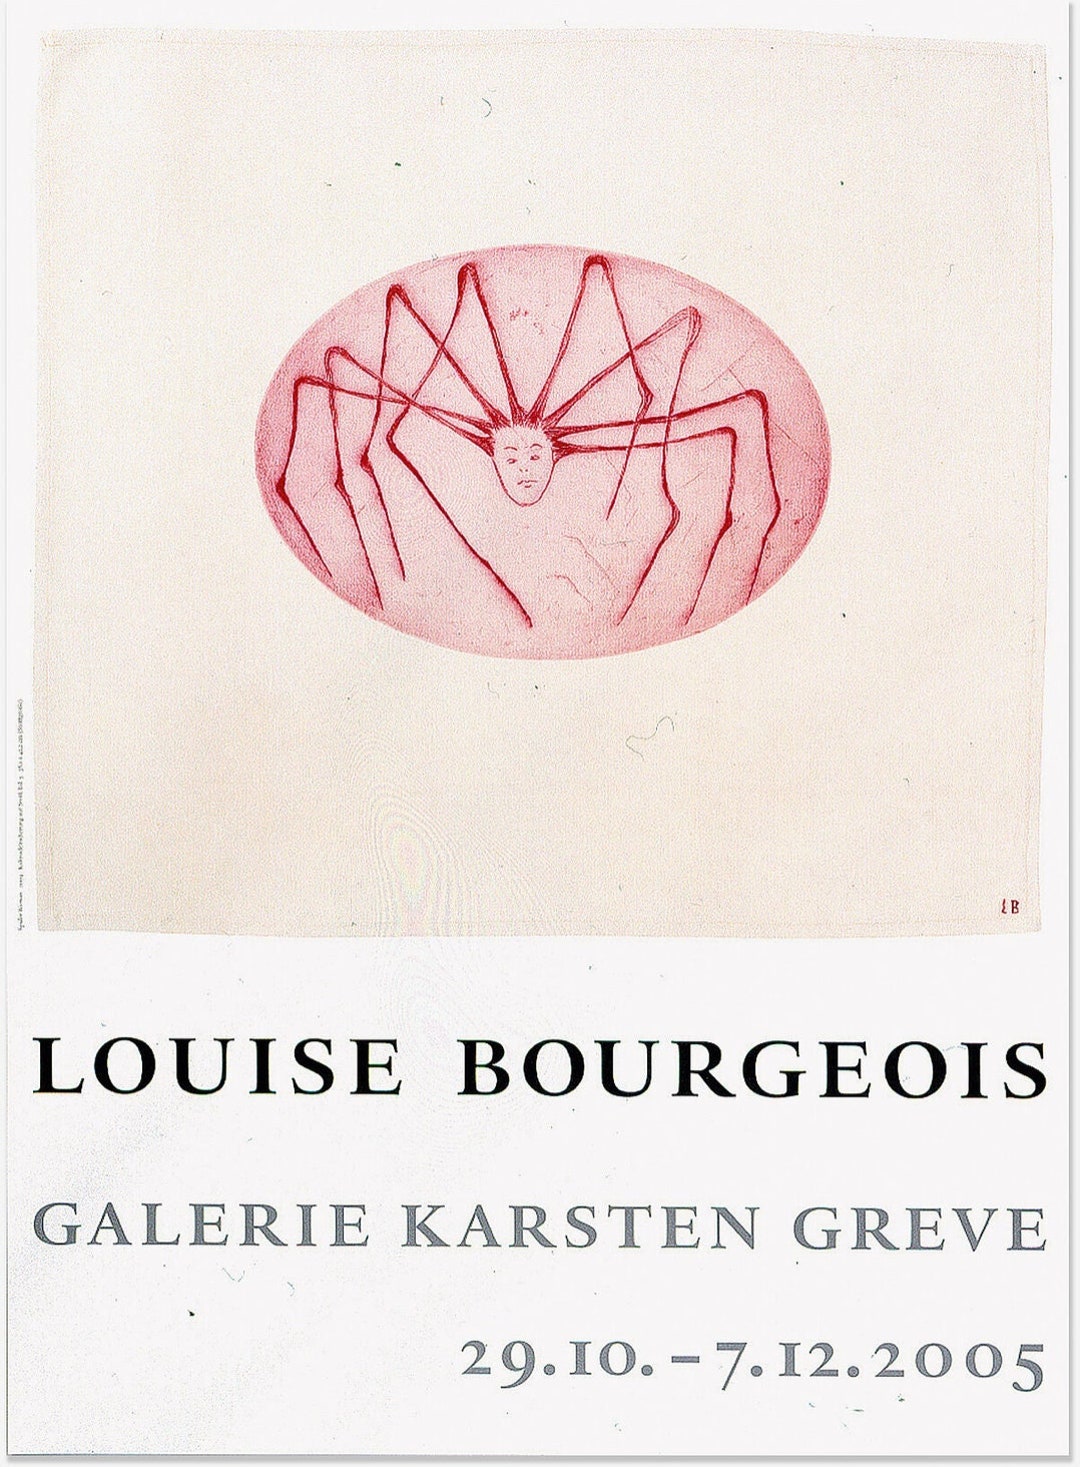 Louise Bourgeois exhibition